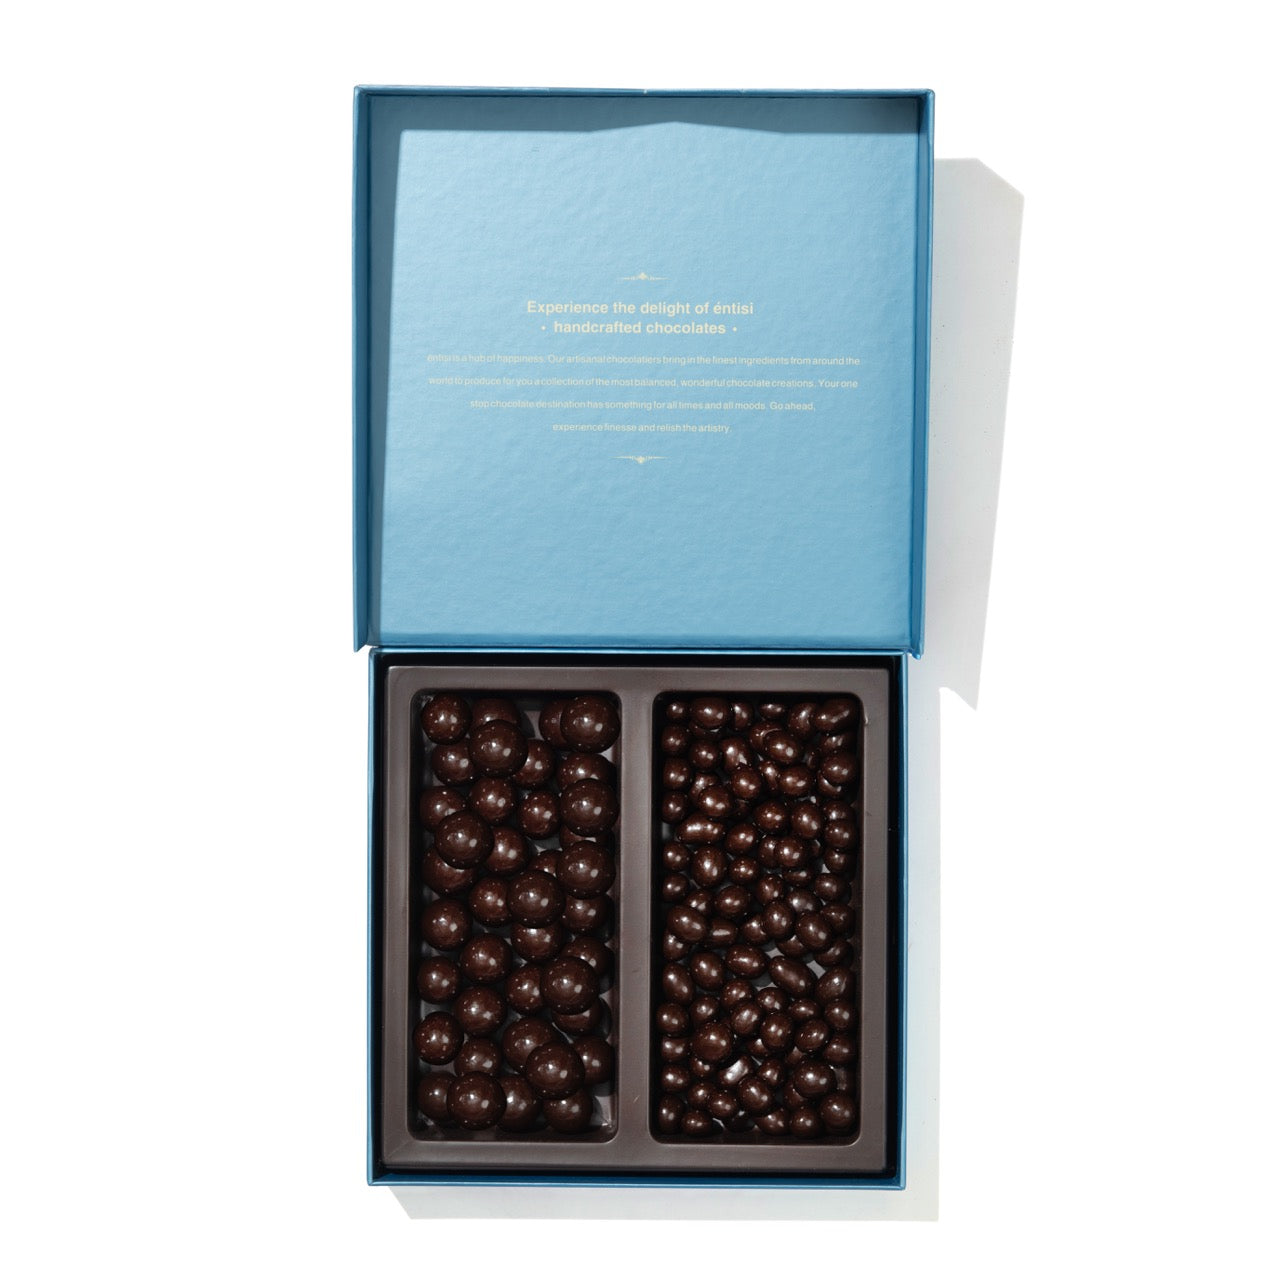 Hazelnut & Coffee Bean Dragees Gift Box